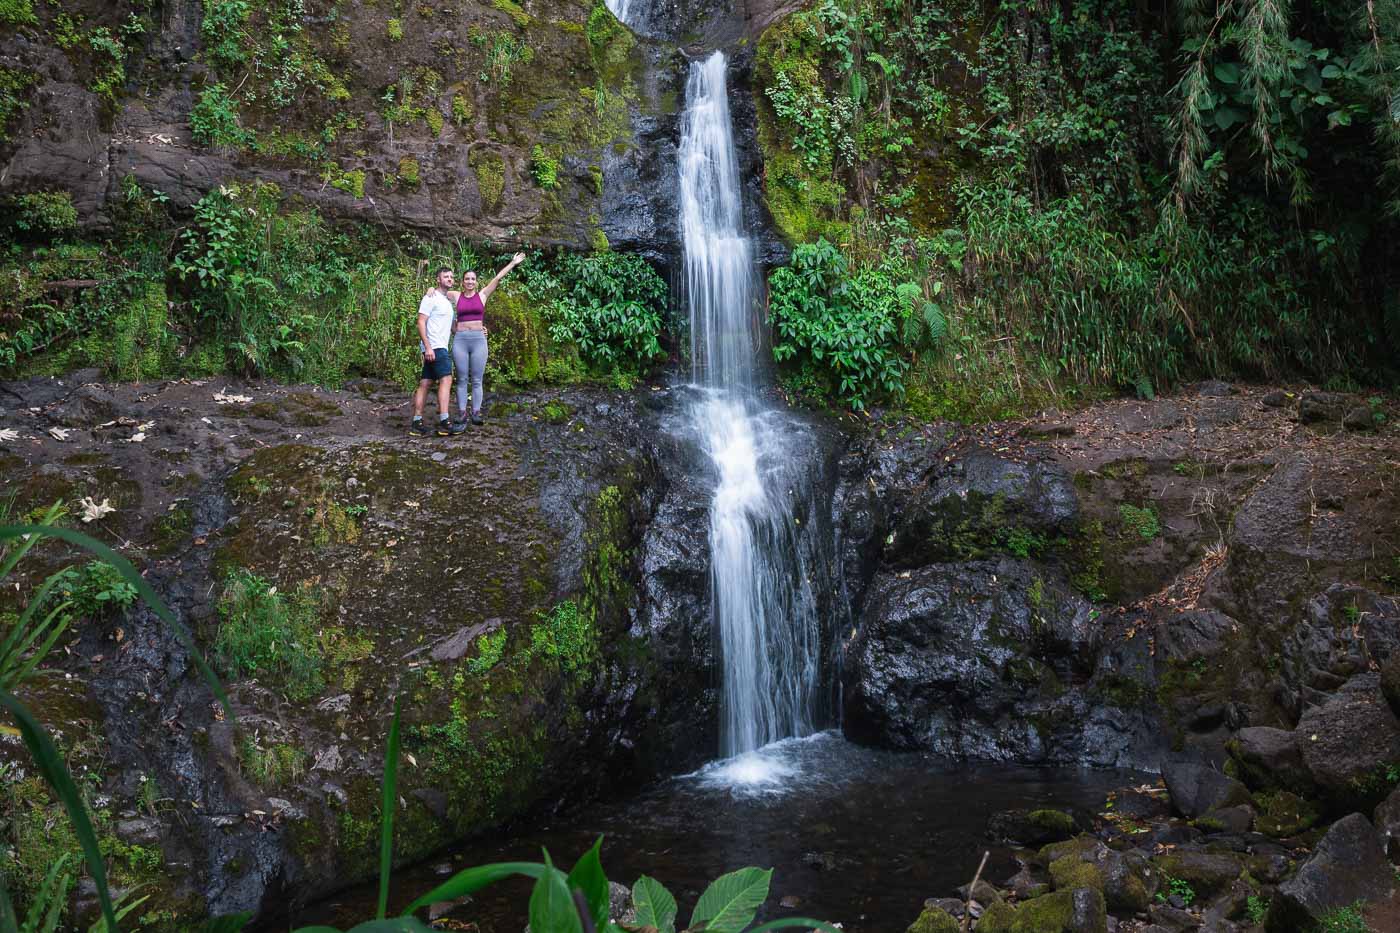 Sara and Ryan posing next to the Fall of the Dragon waterfall.